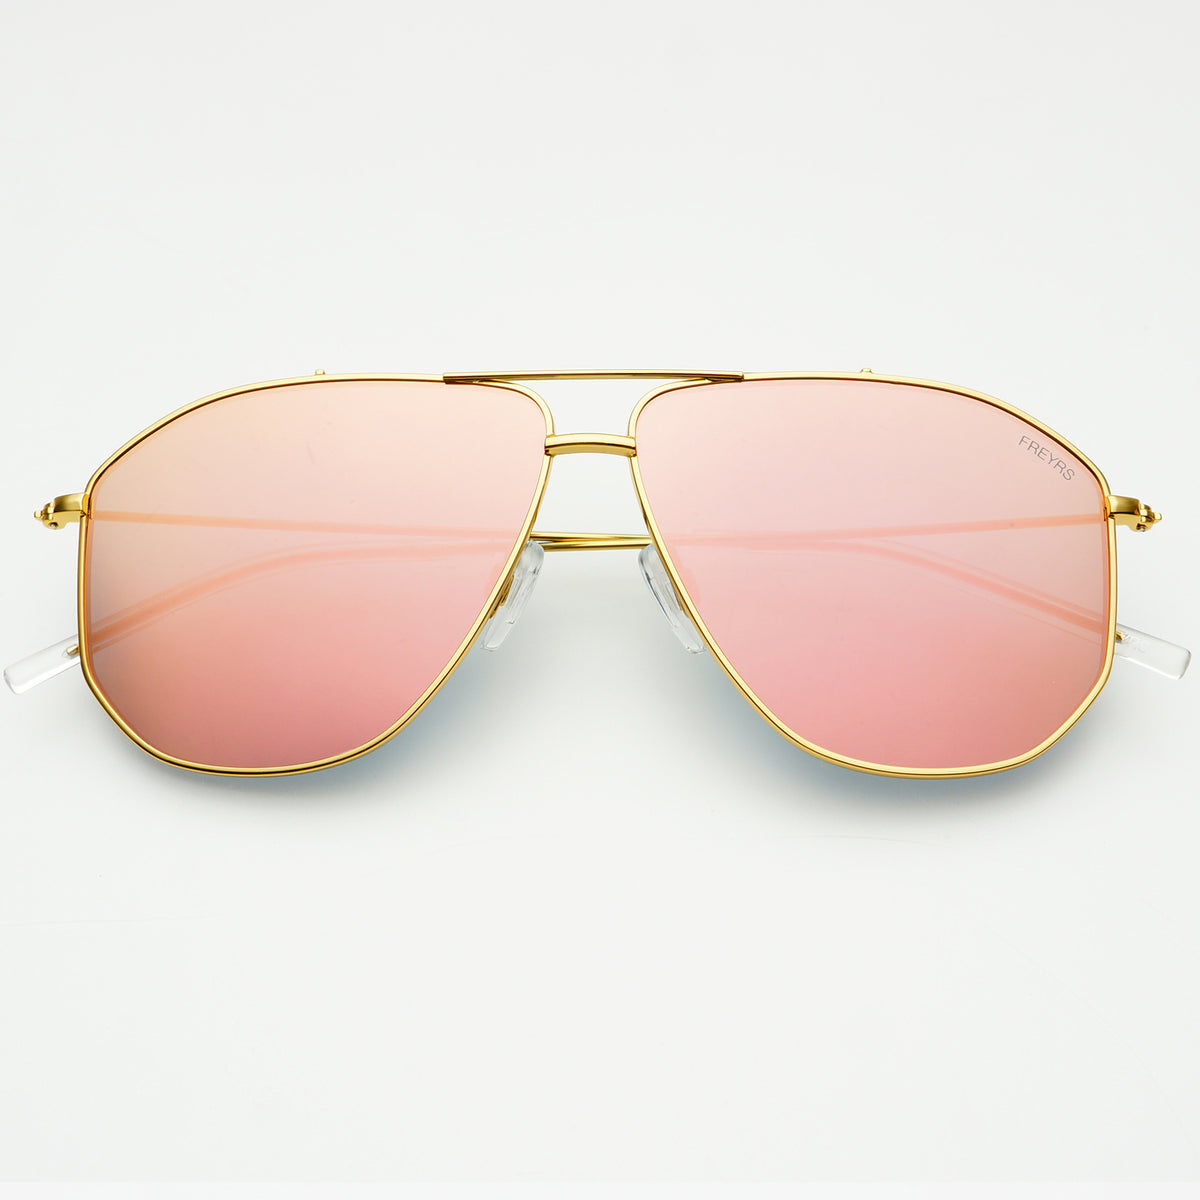 Barry Pink Mirrored Womens Gold Aviator Sunglasses by FREYRS Eyewear